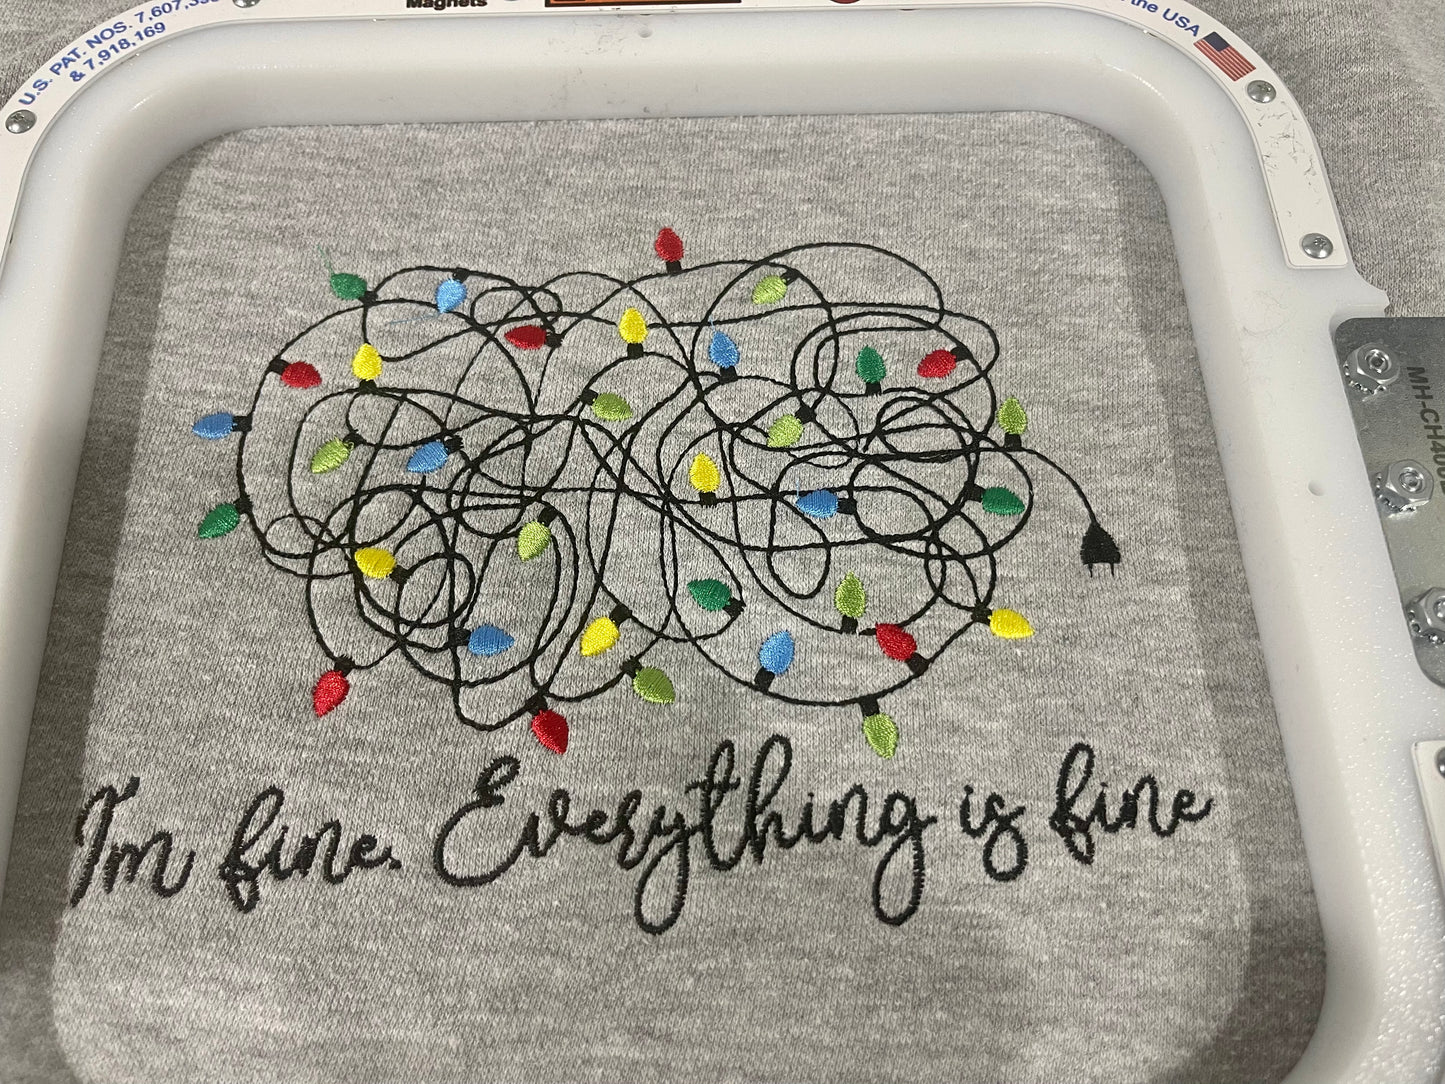 I'mFineEvertythingisFine-Embroidered